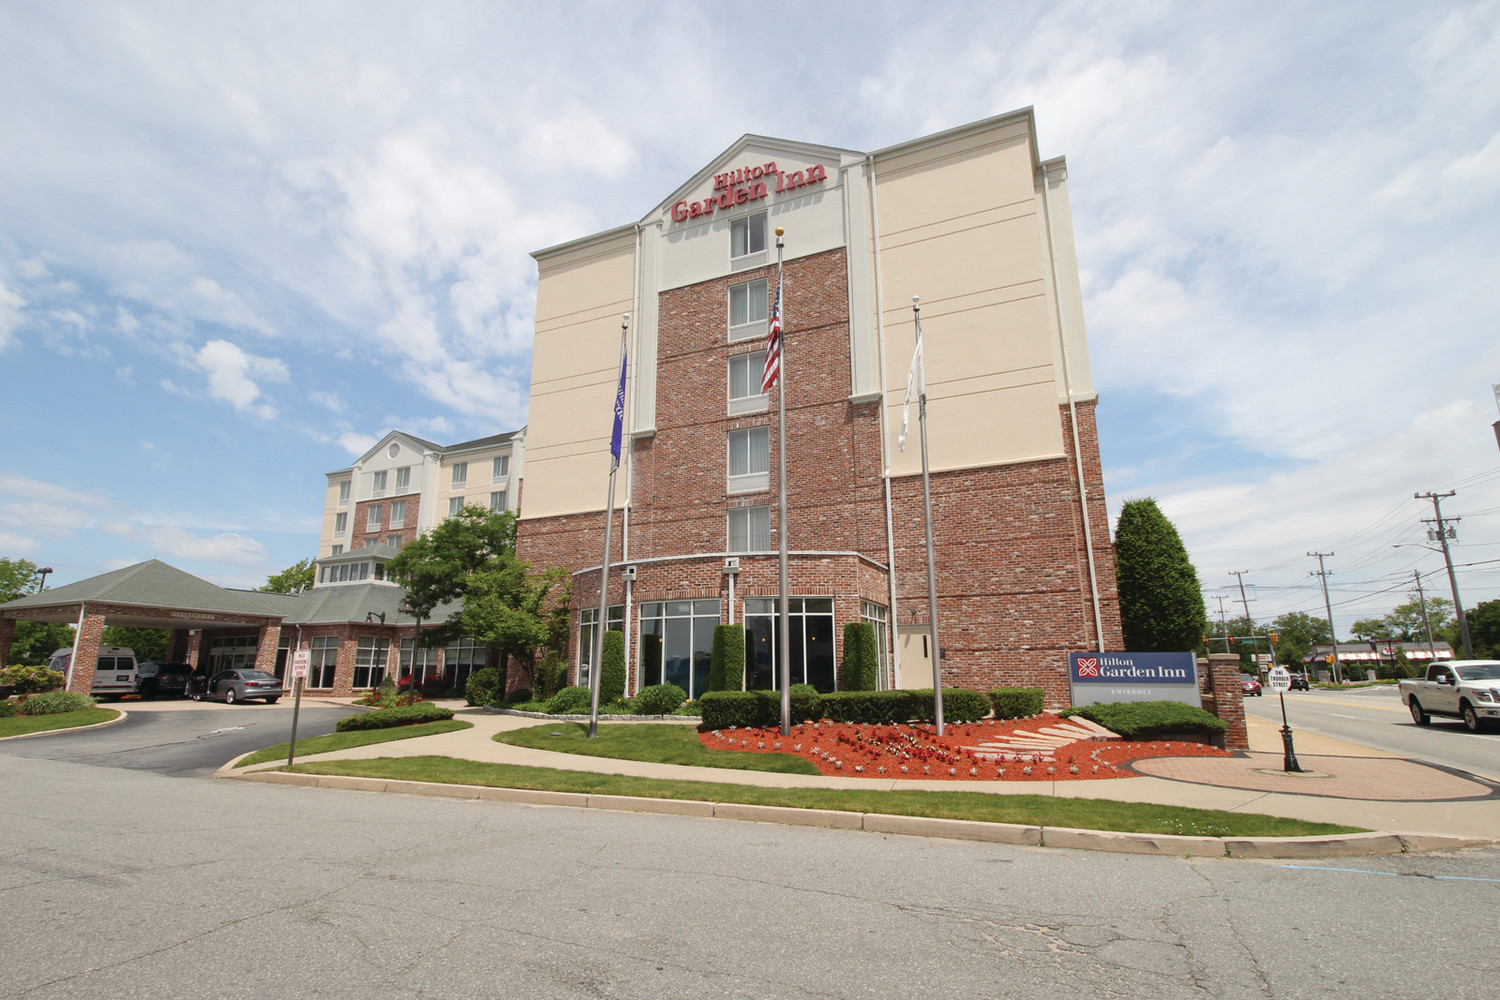 SAME FLAG, NEW OWNER: Joe Piscopio has sold the Hilton Garden Inn to MCR Development LLC for $25 million.